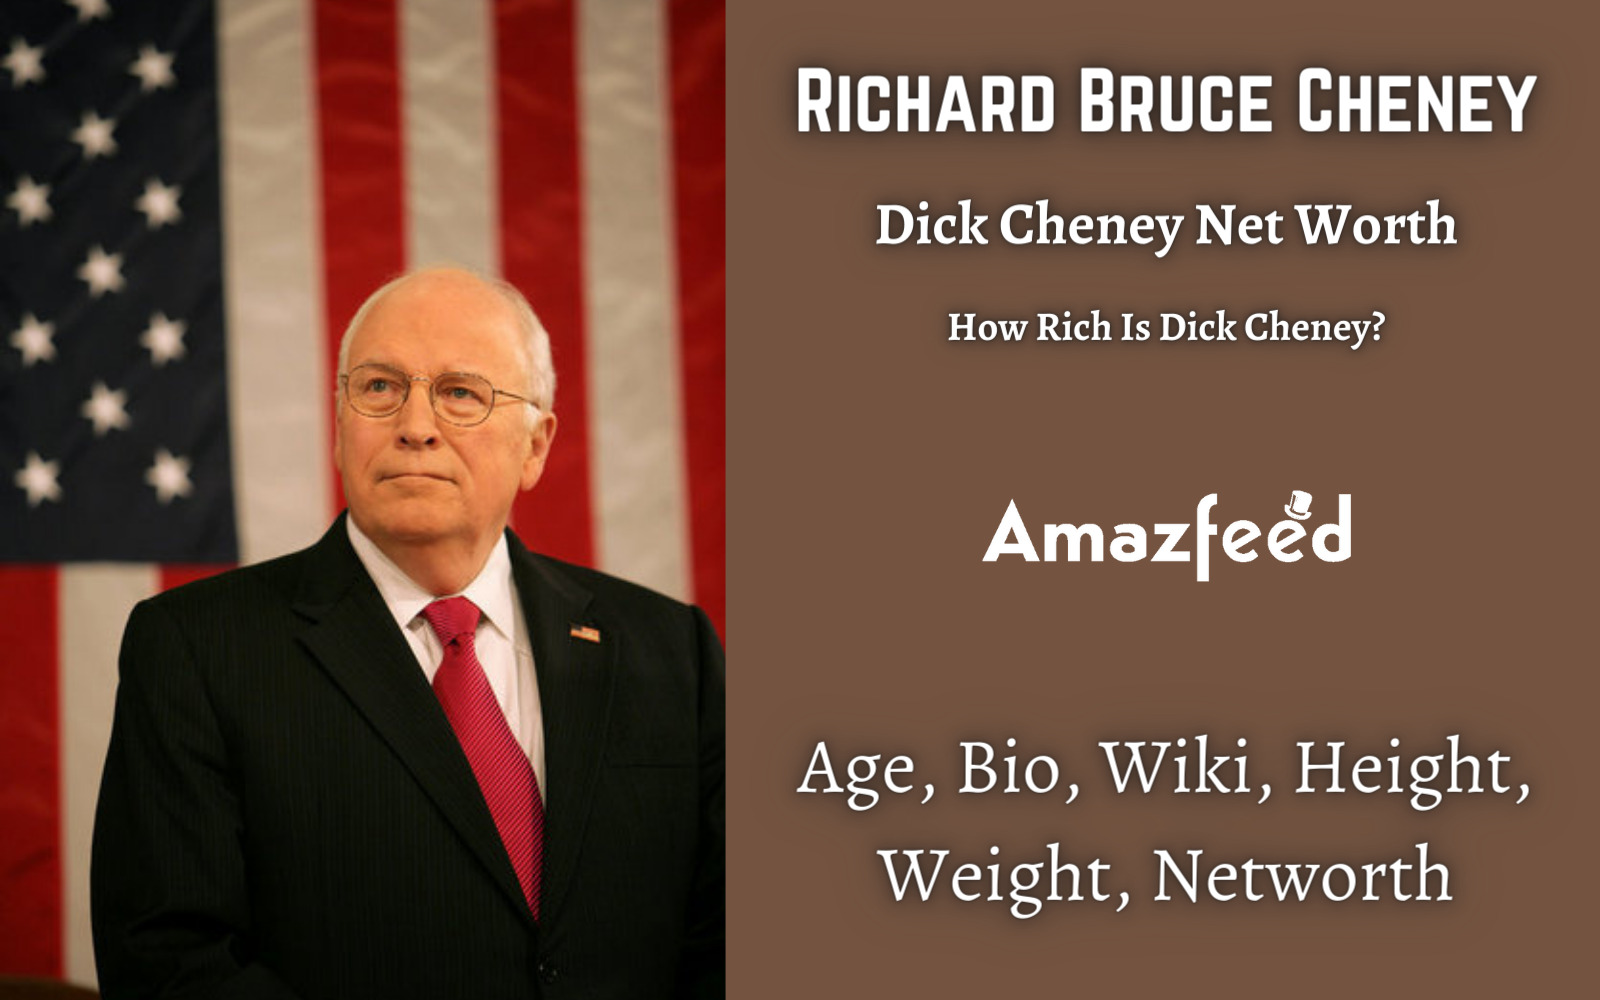 Richard Bruce Cheney